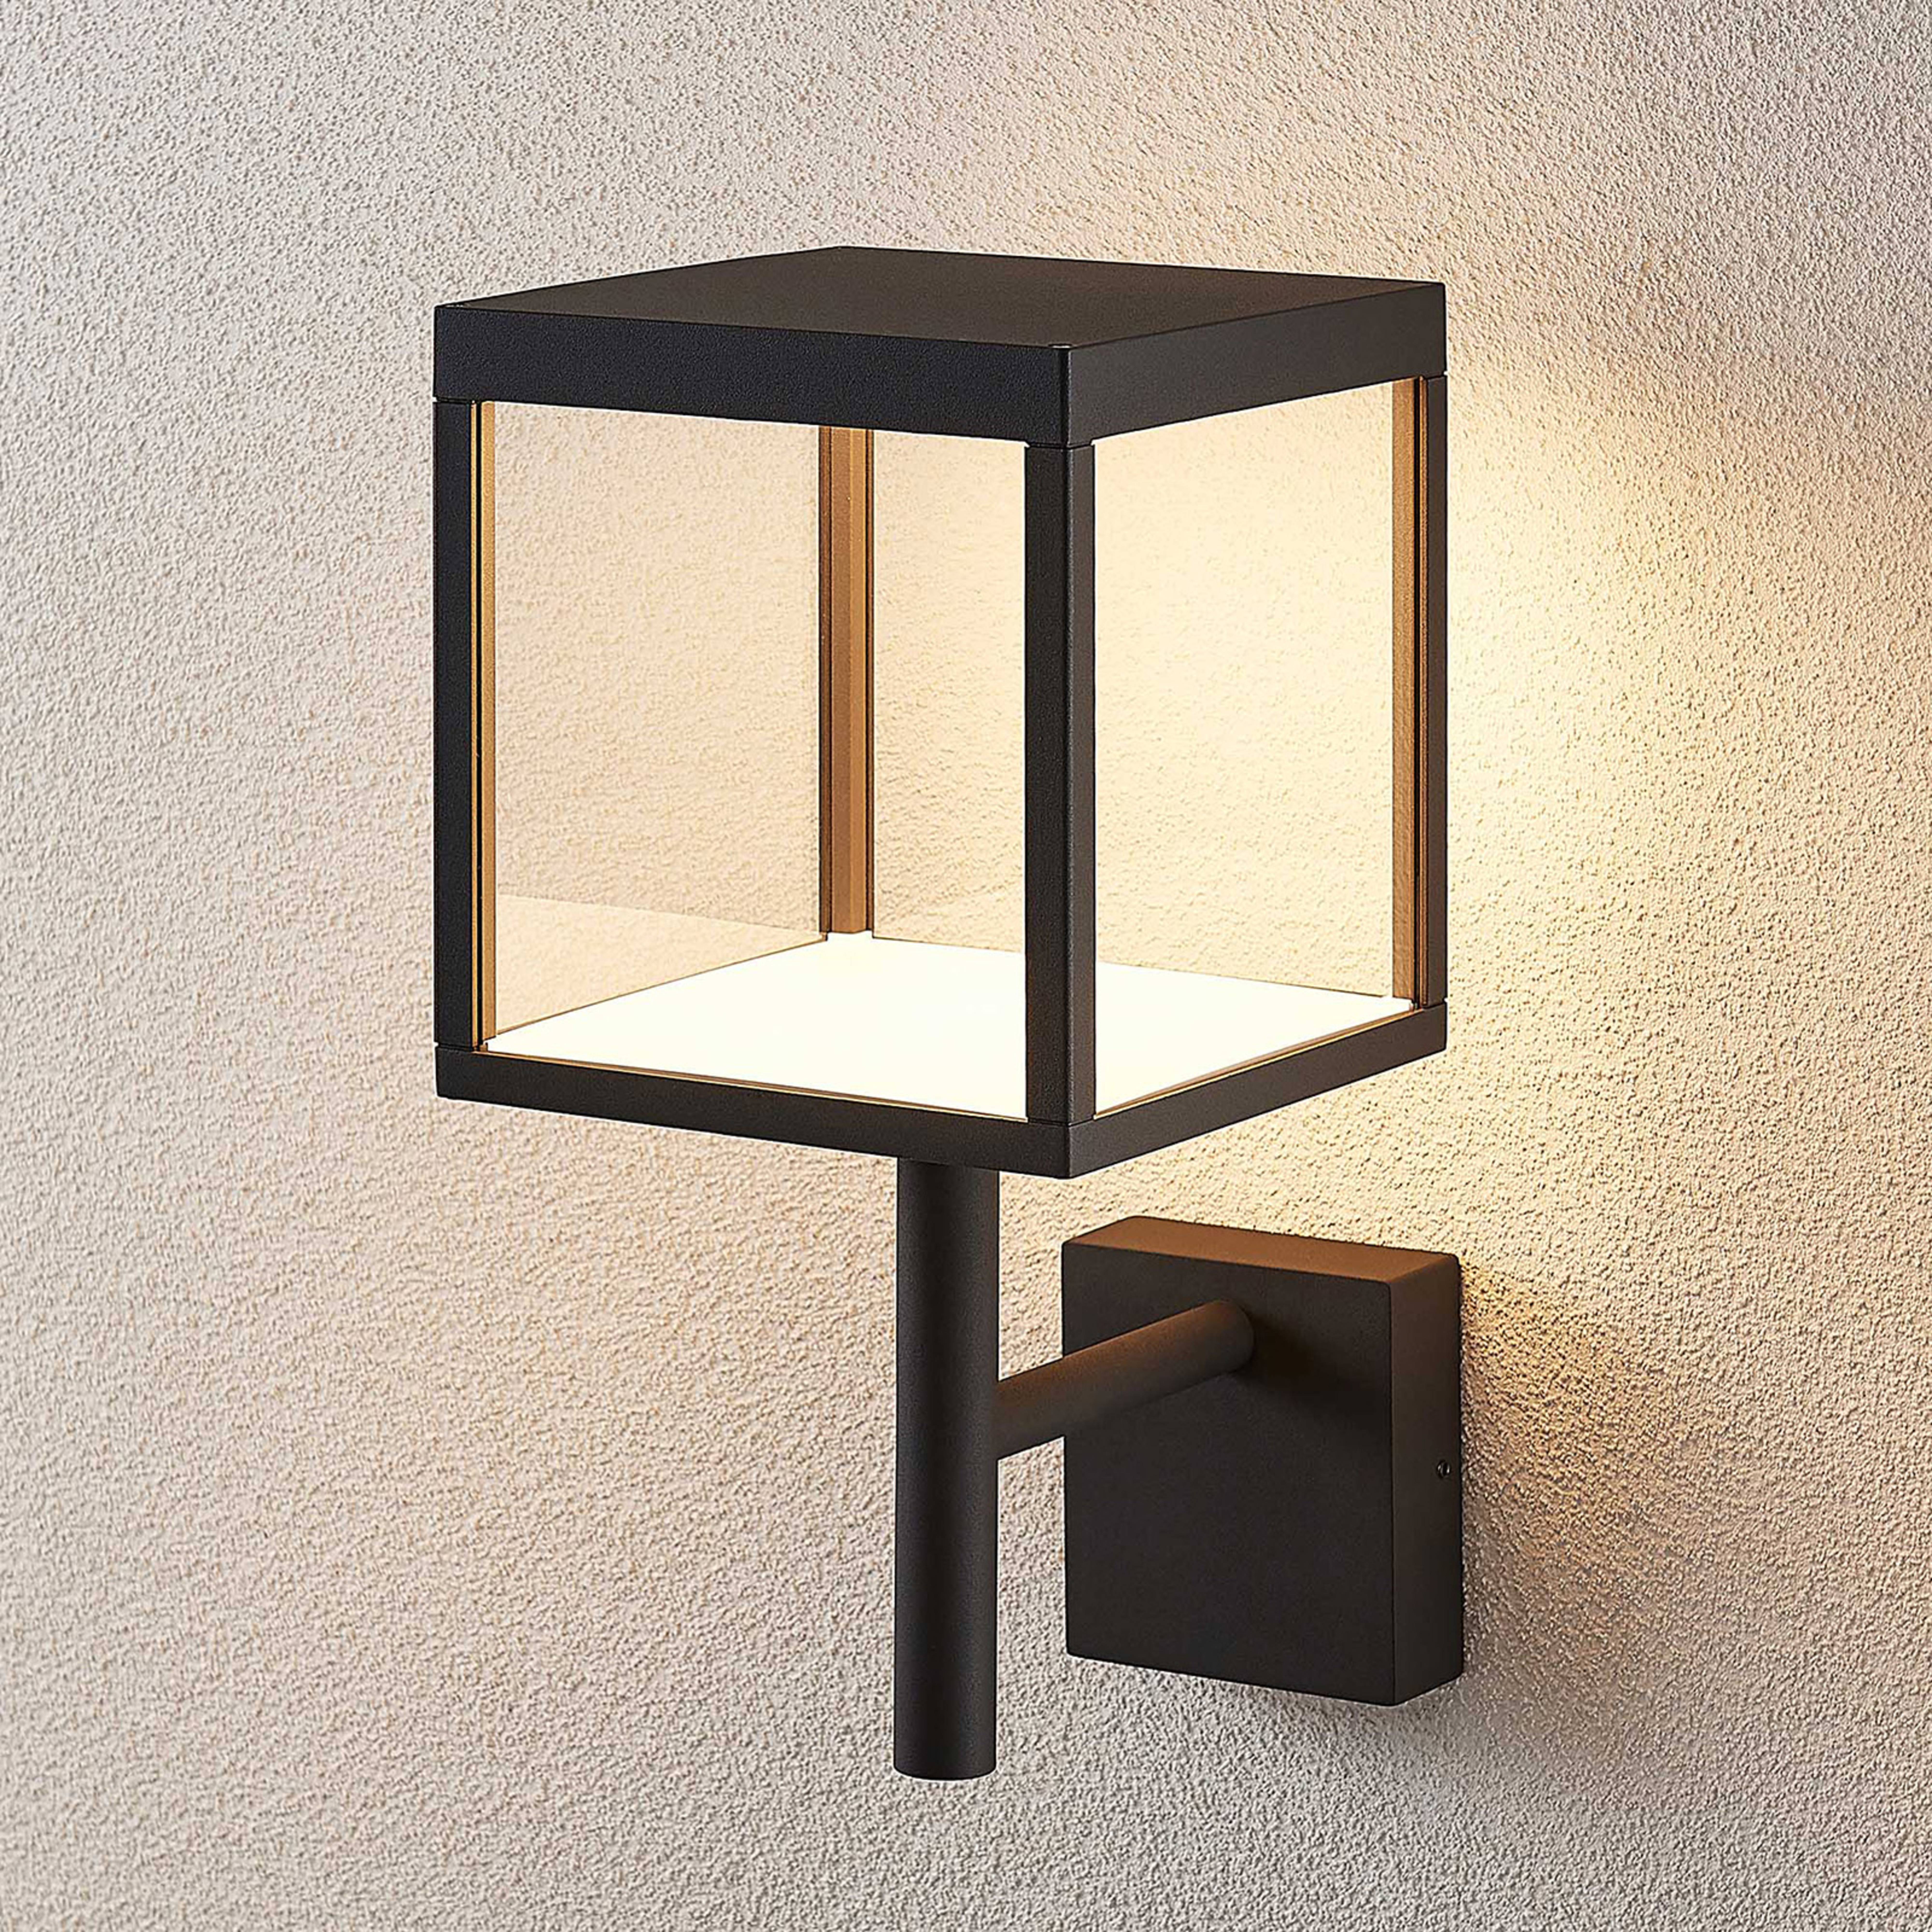 Aplique LED exterior Cube, pantalla vidrio grafito